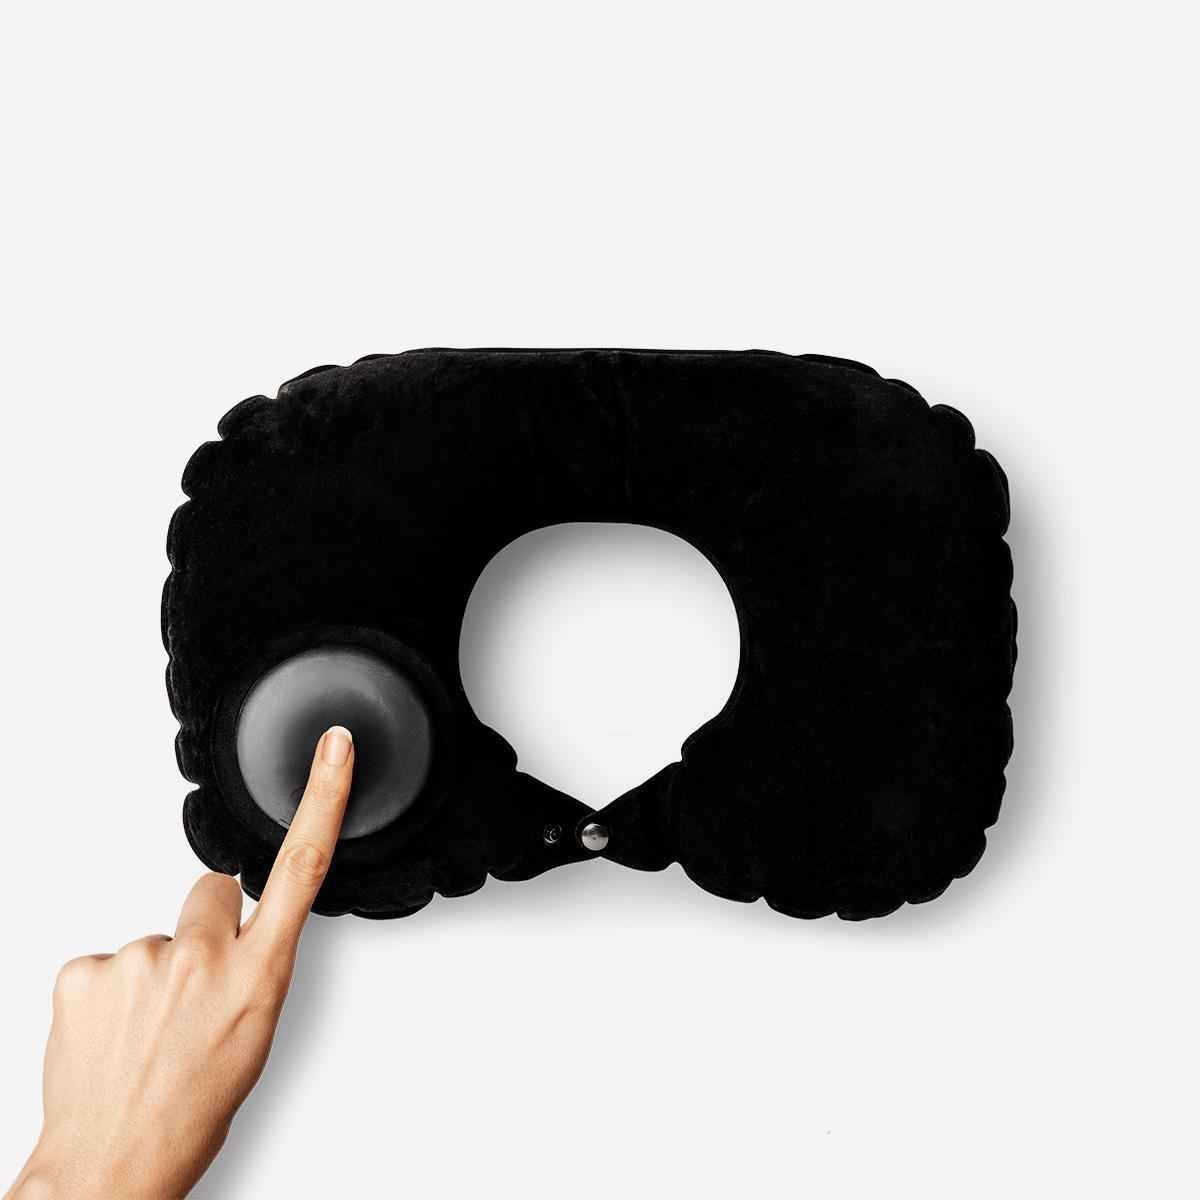 Black self-inflating travel pillow